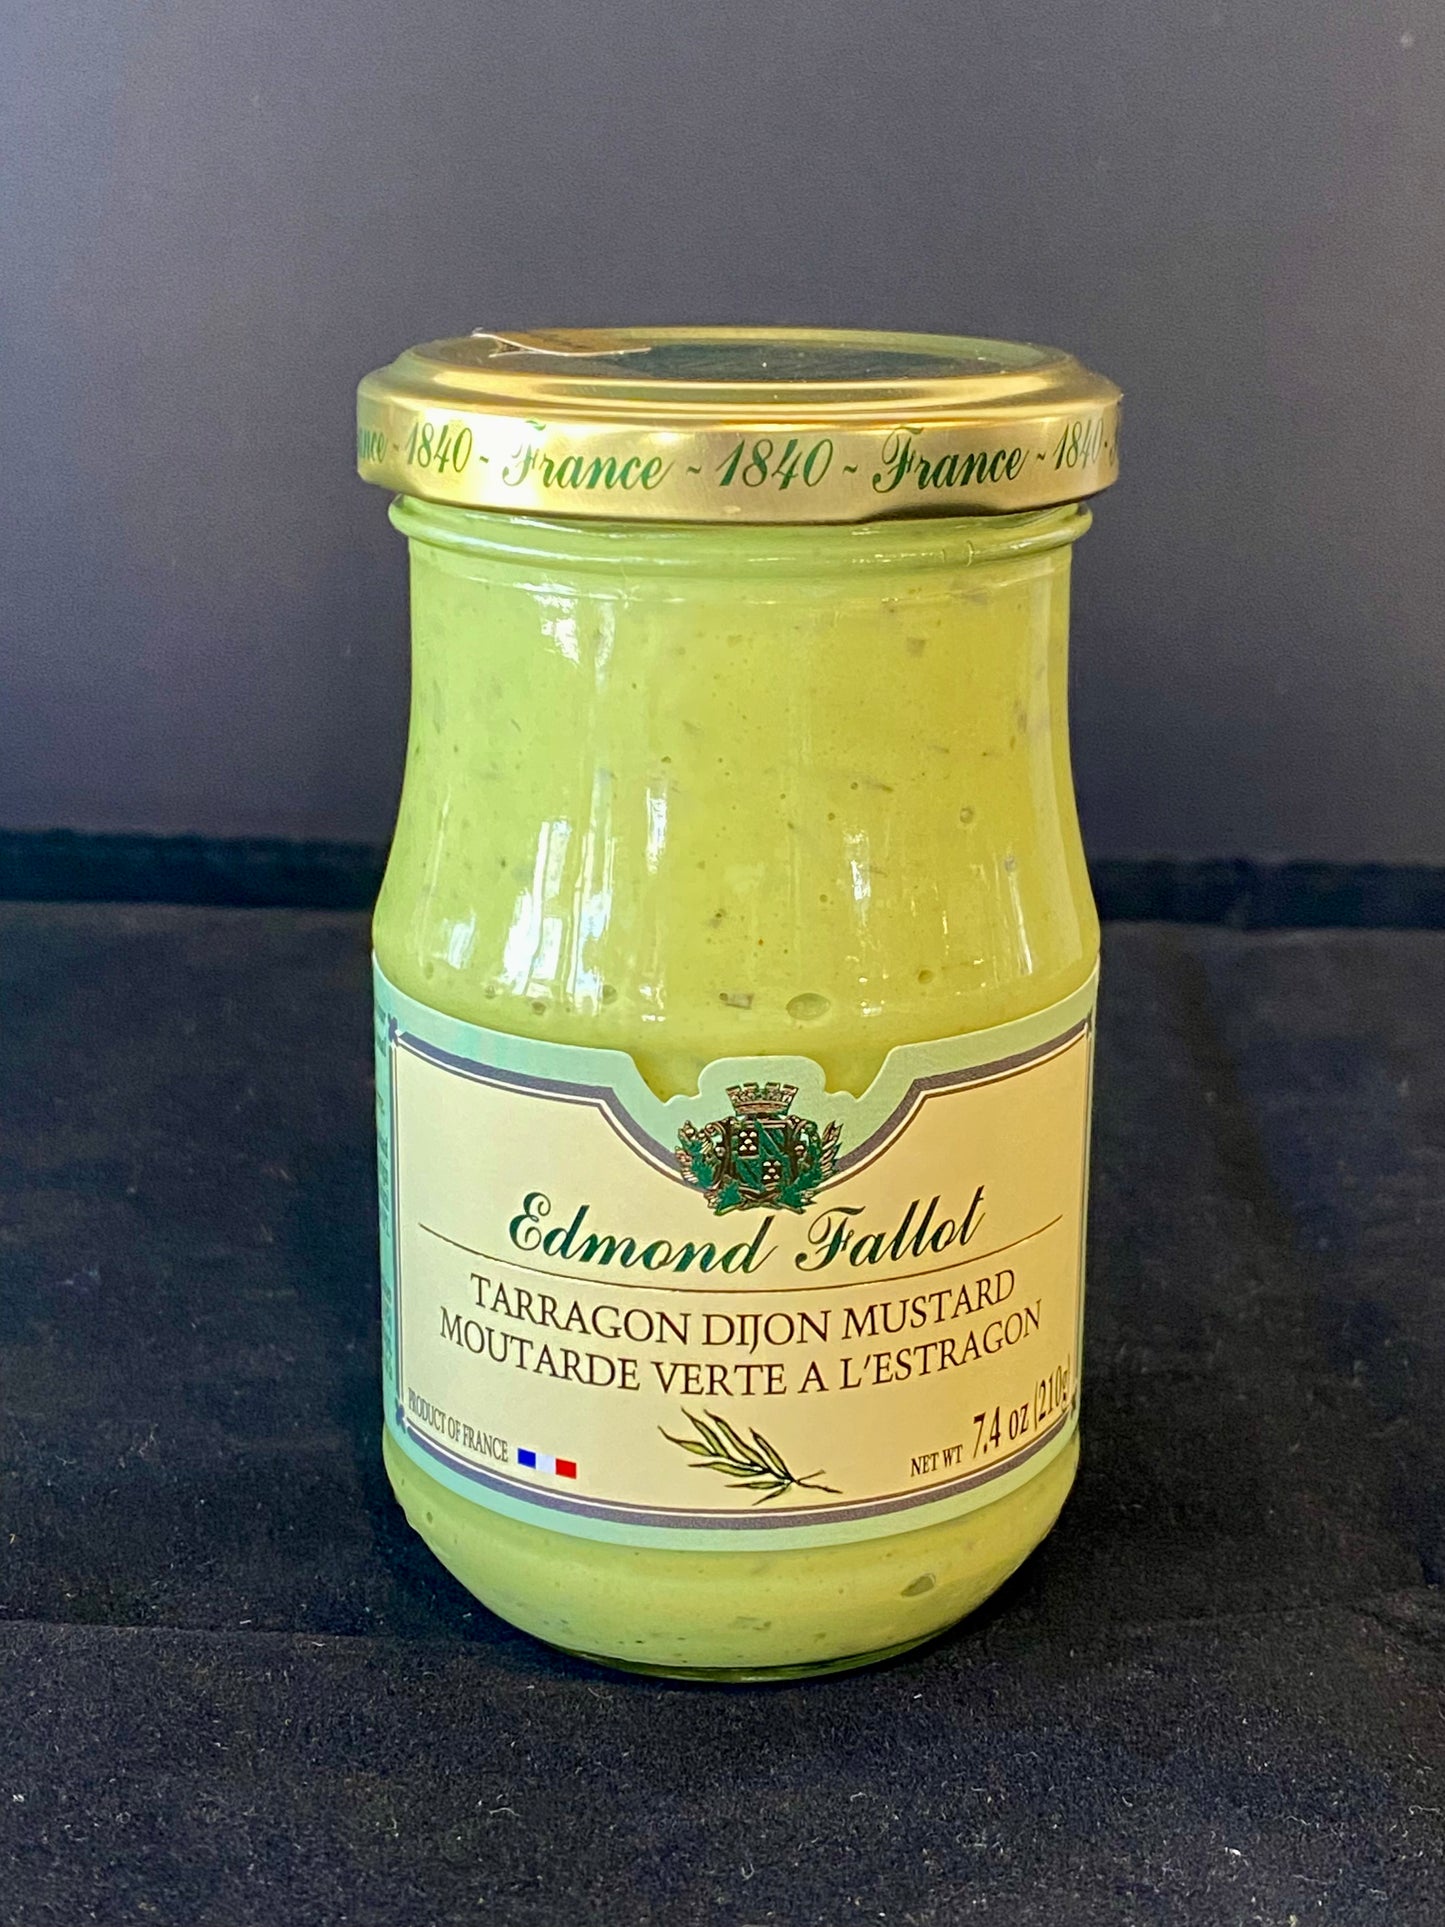 Tarragon Dijon Mustard